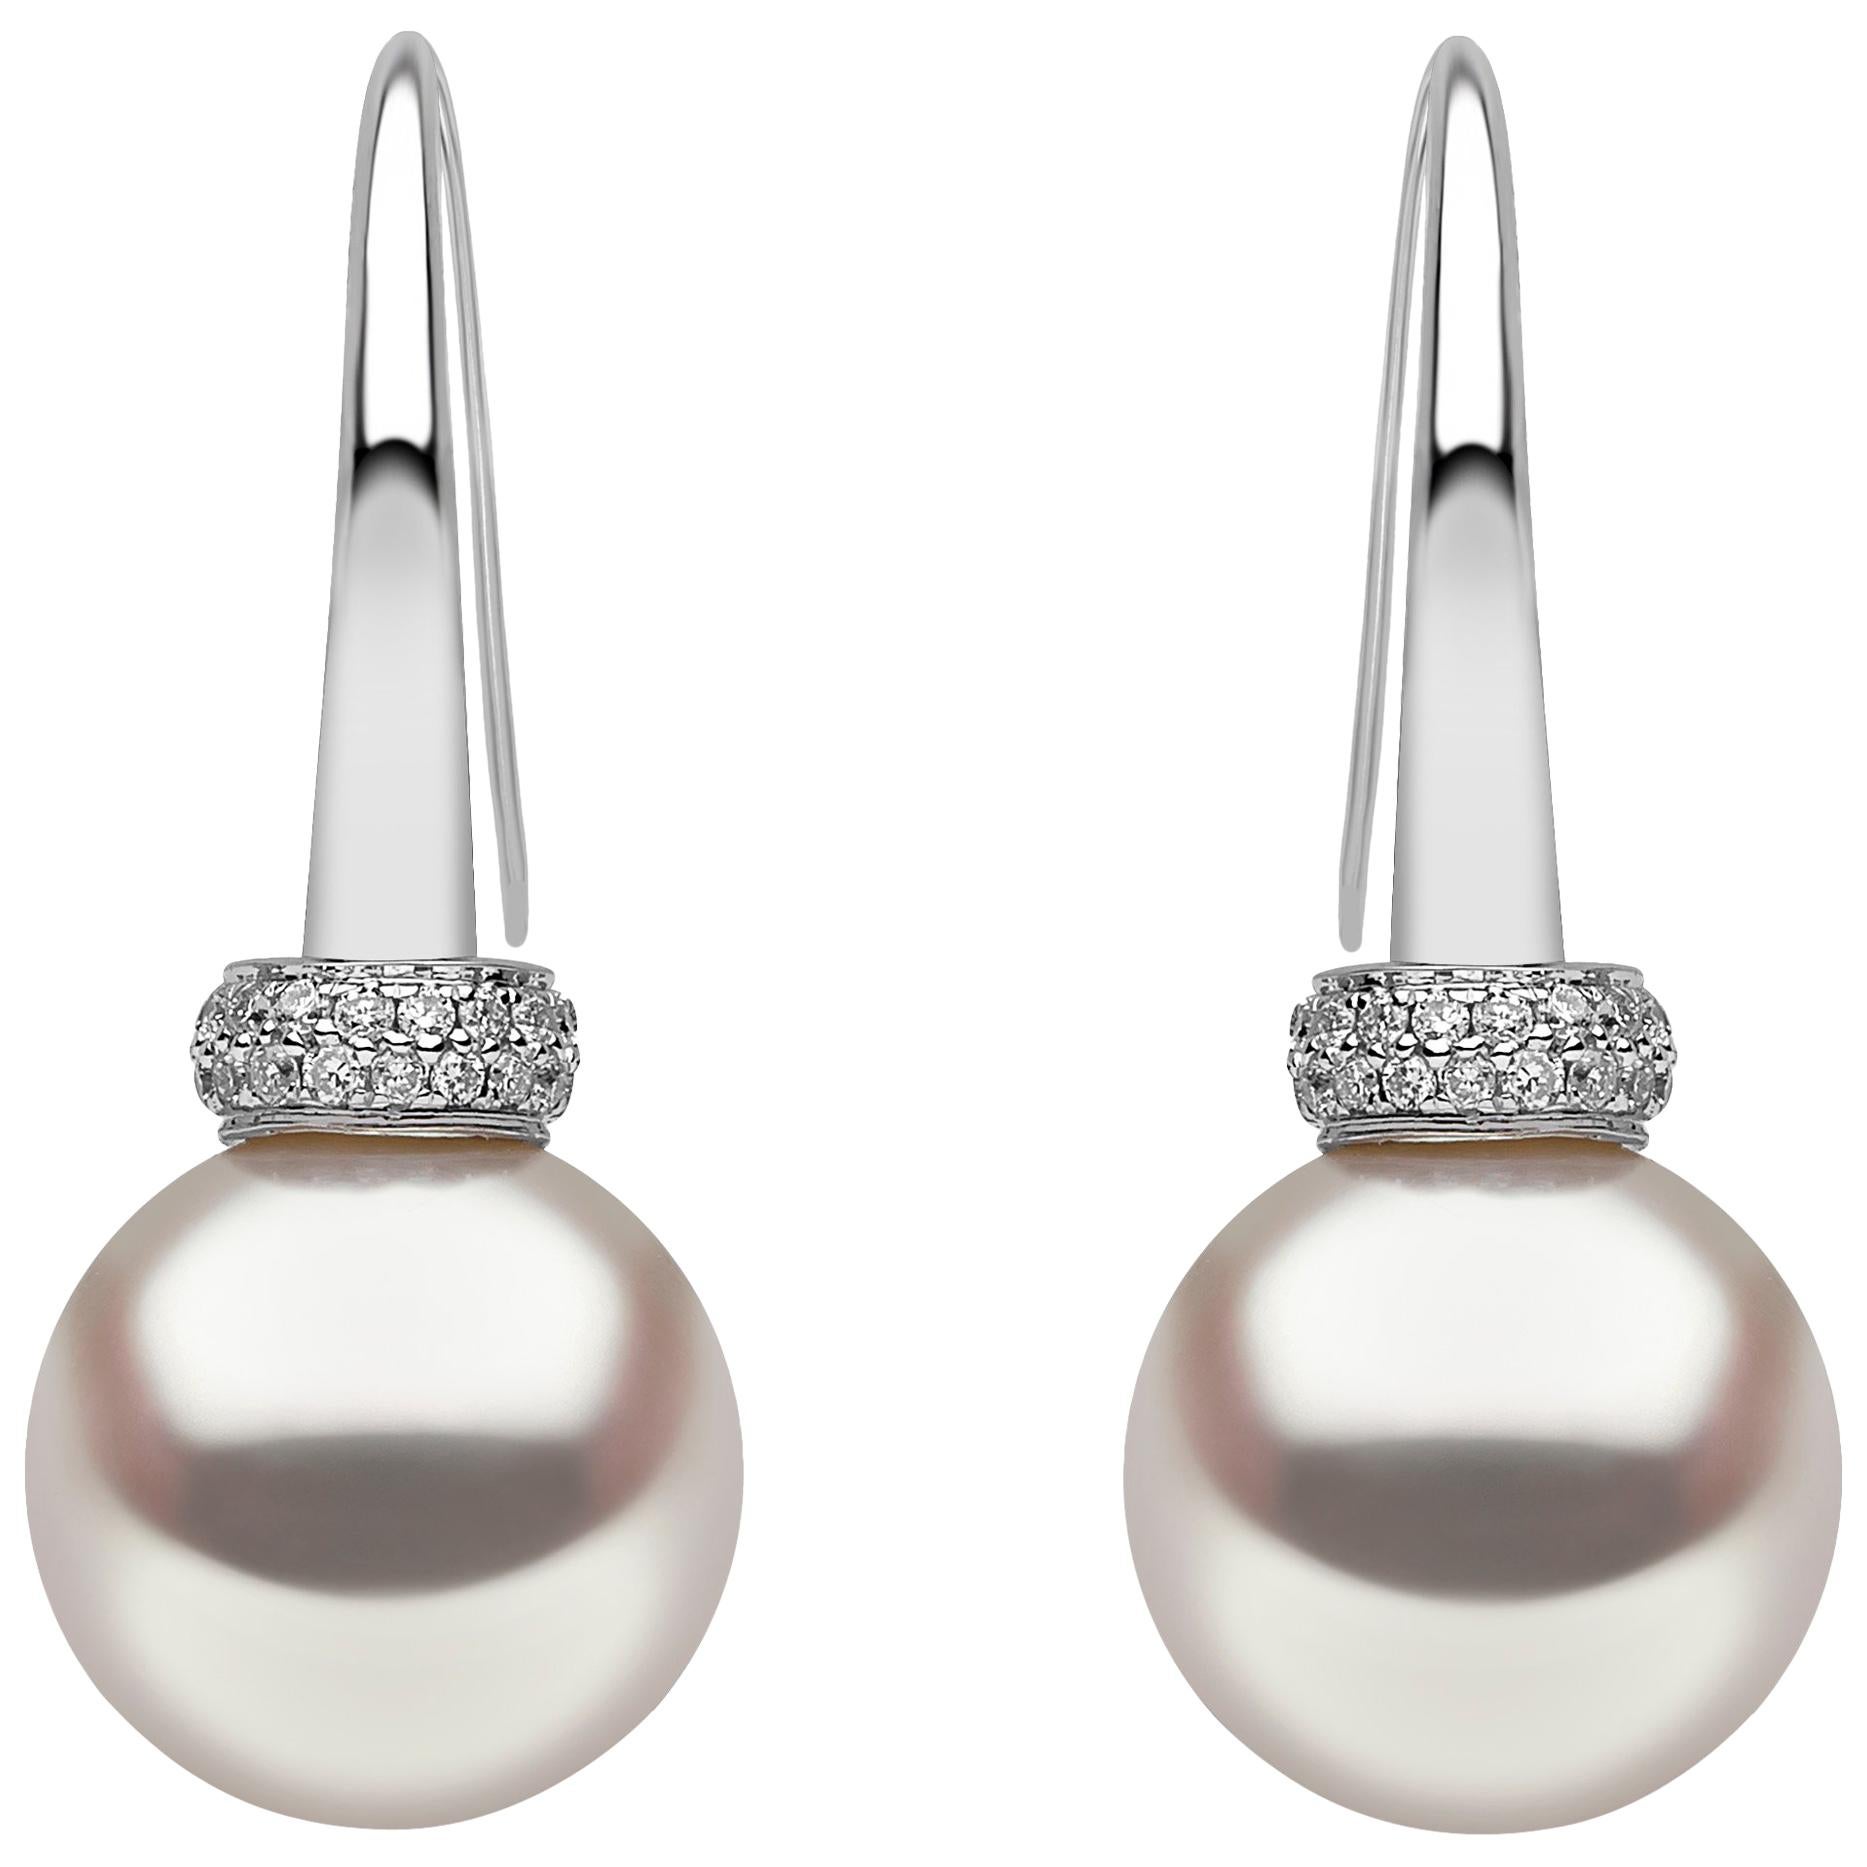 Yoko London Pearl and Diamond Earrings Set in 18 Karat White Gold